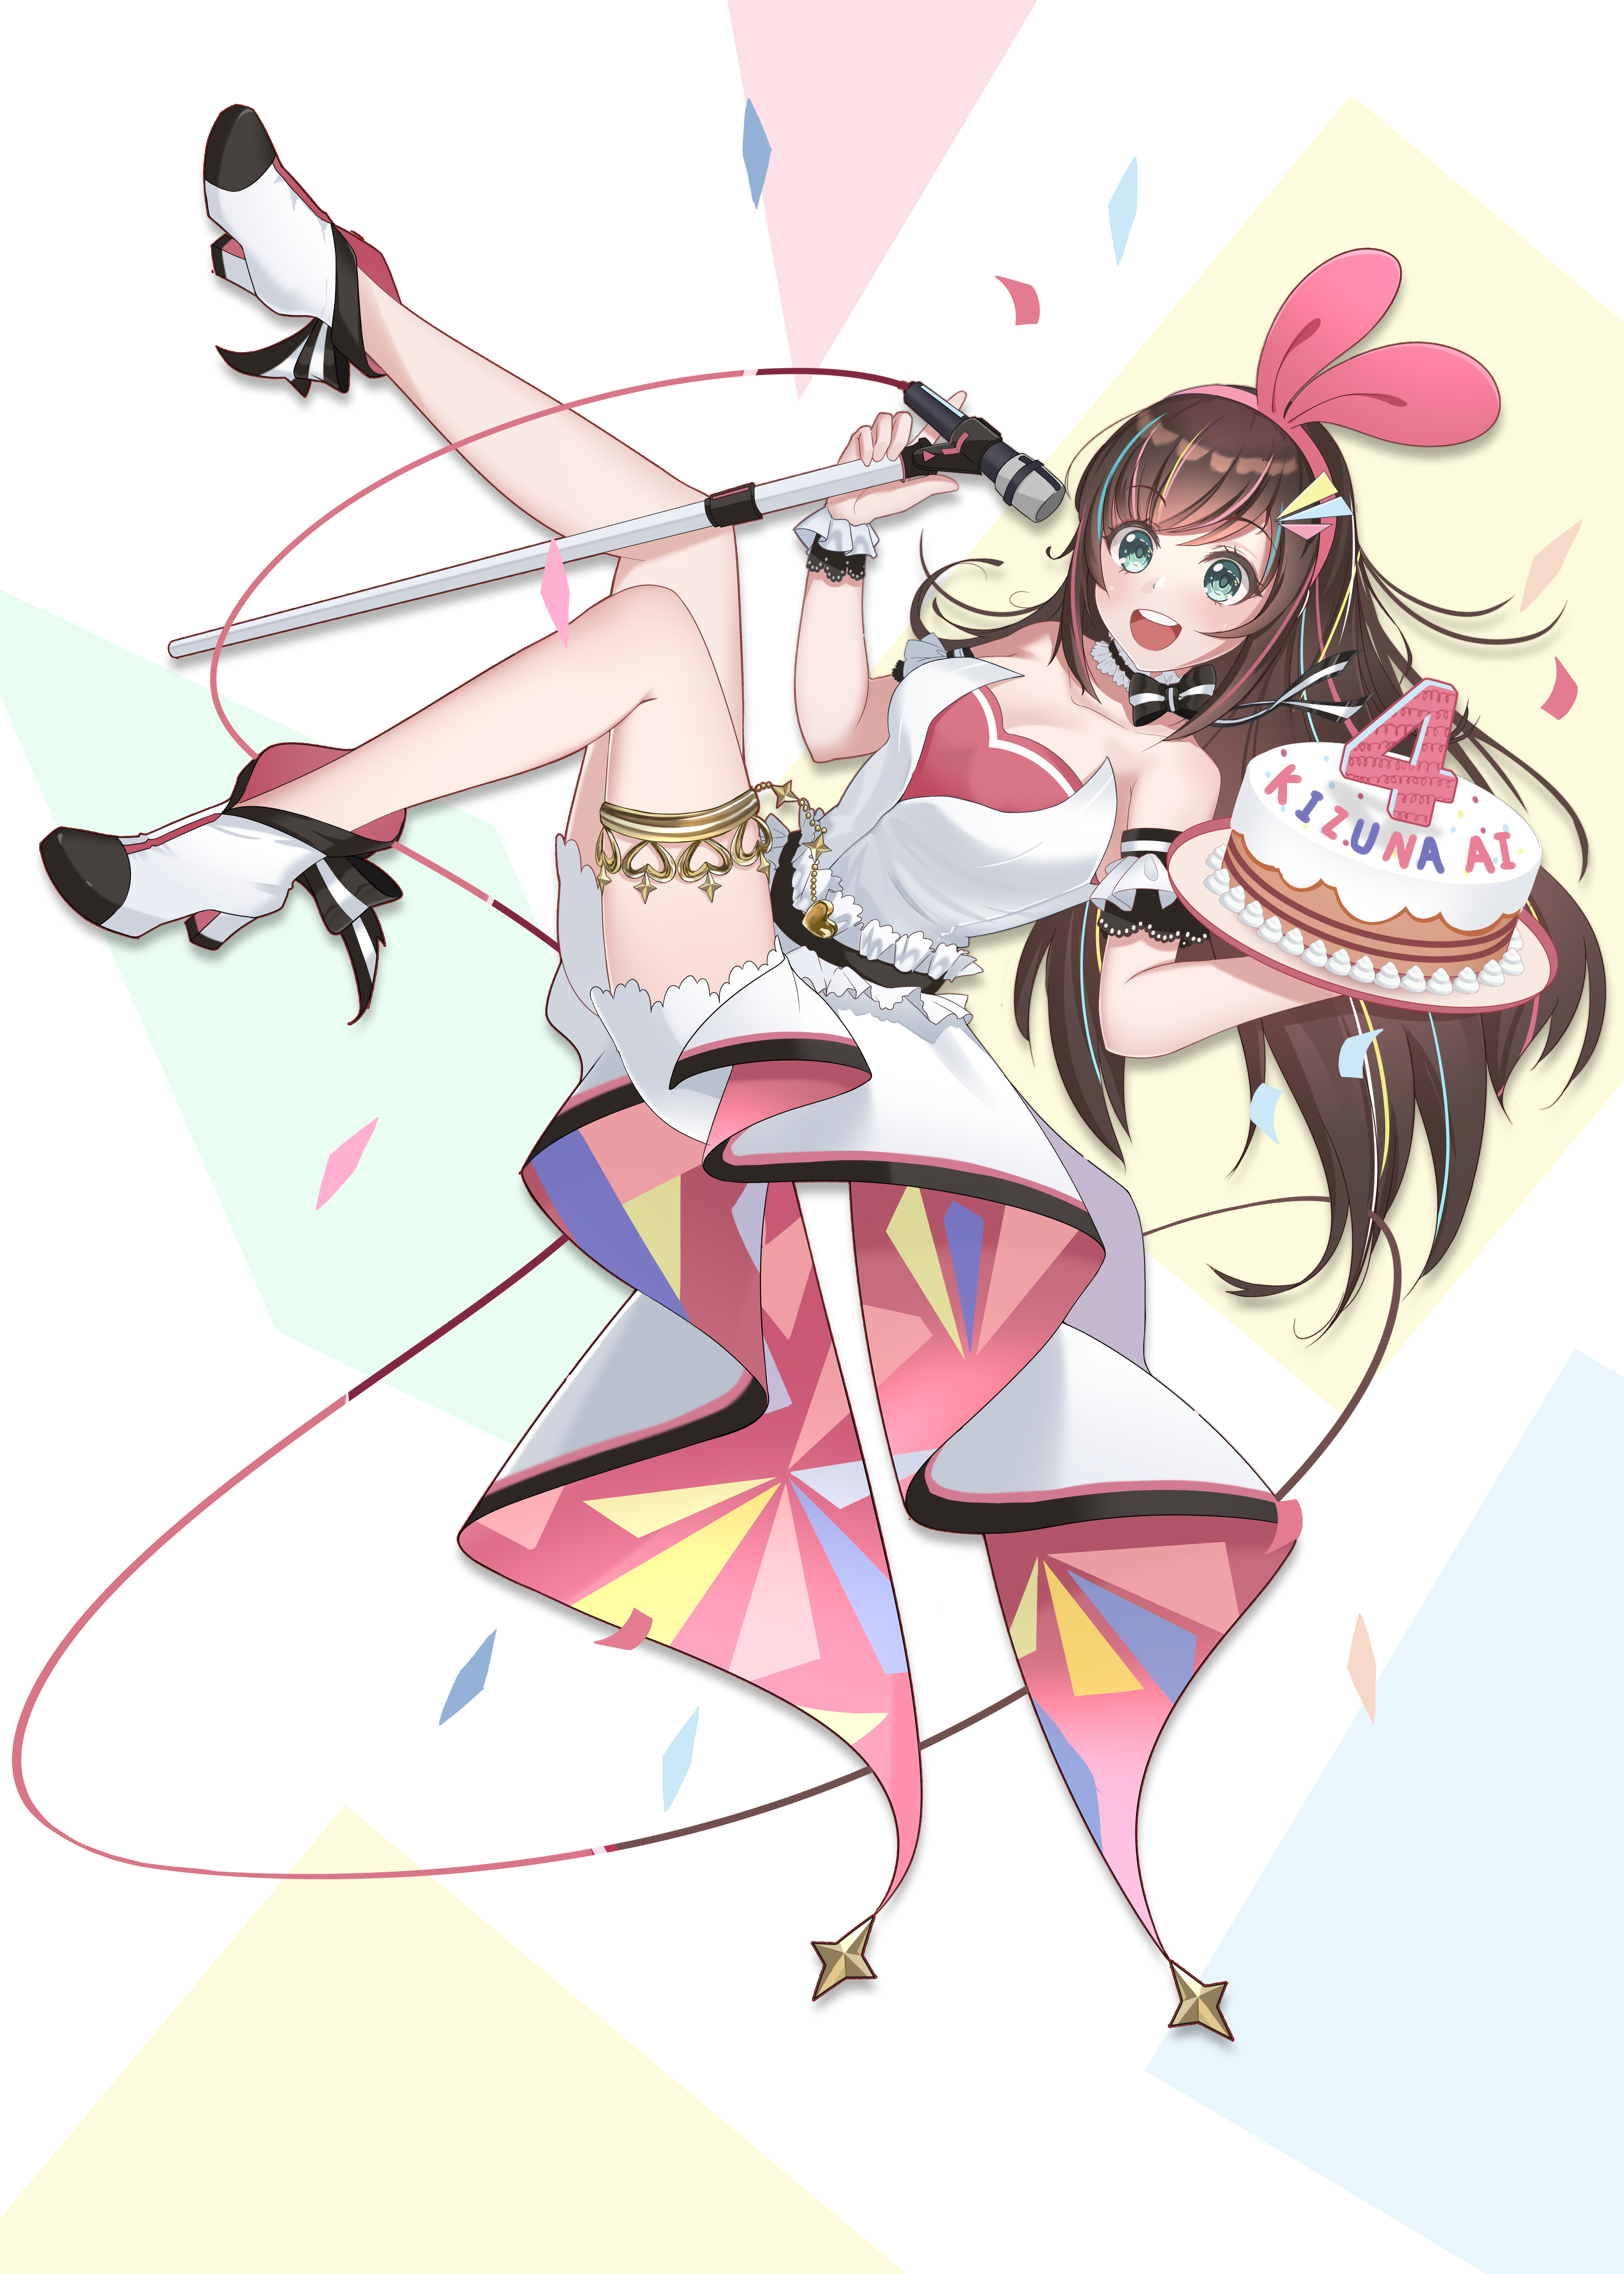 Artwork Anime Girls Nijisanji Kizuna Ai Virtual Youtuber Cake 5000x7000